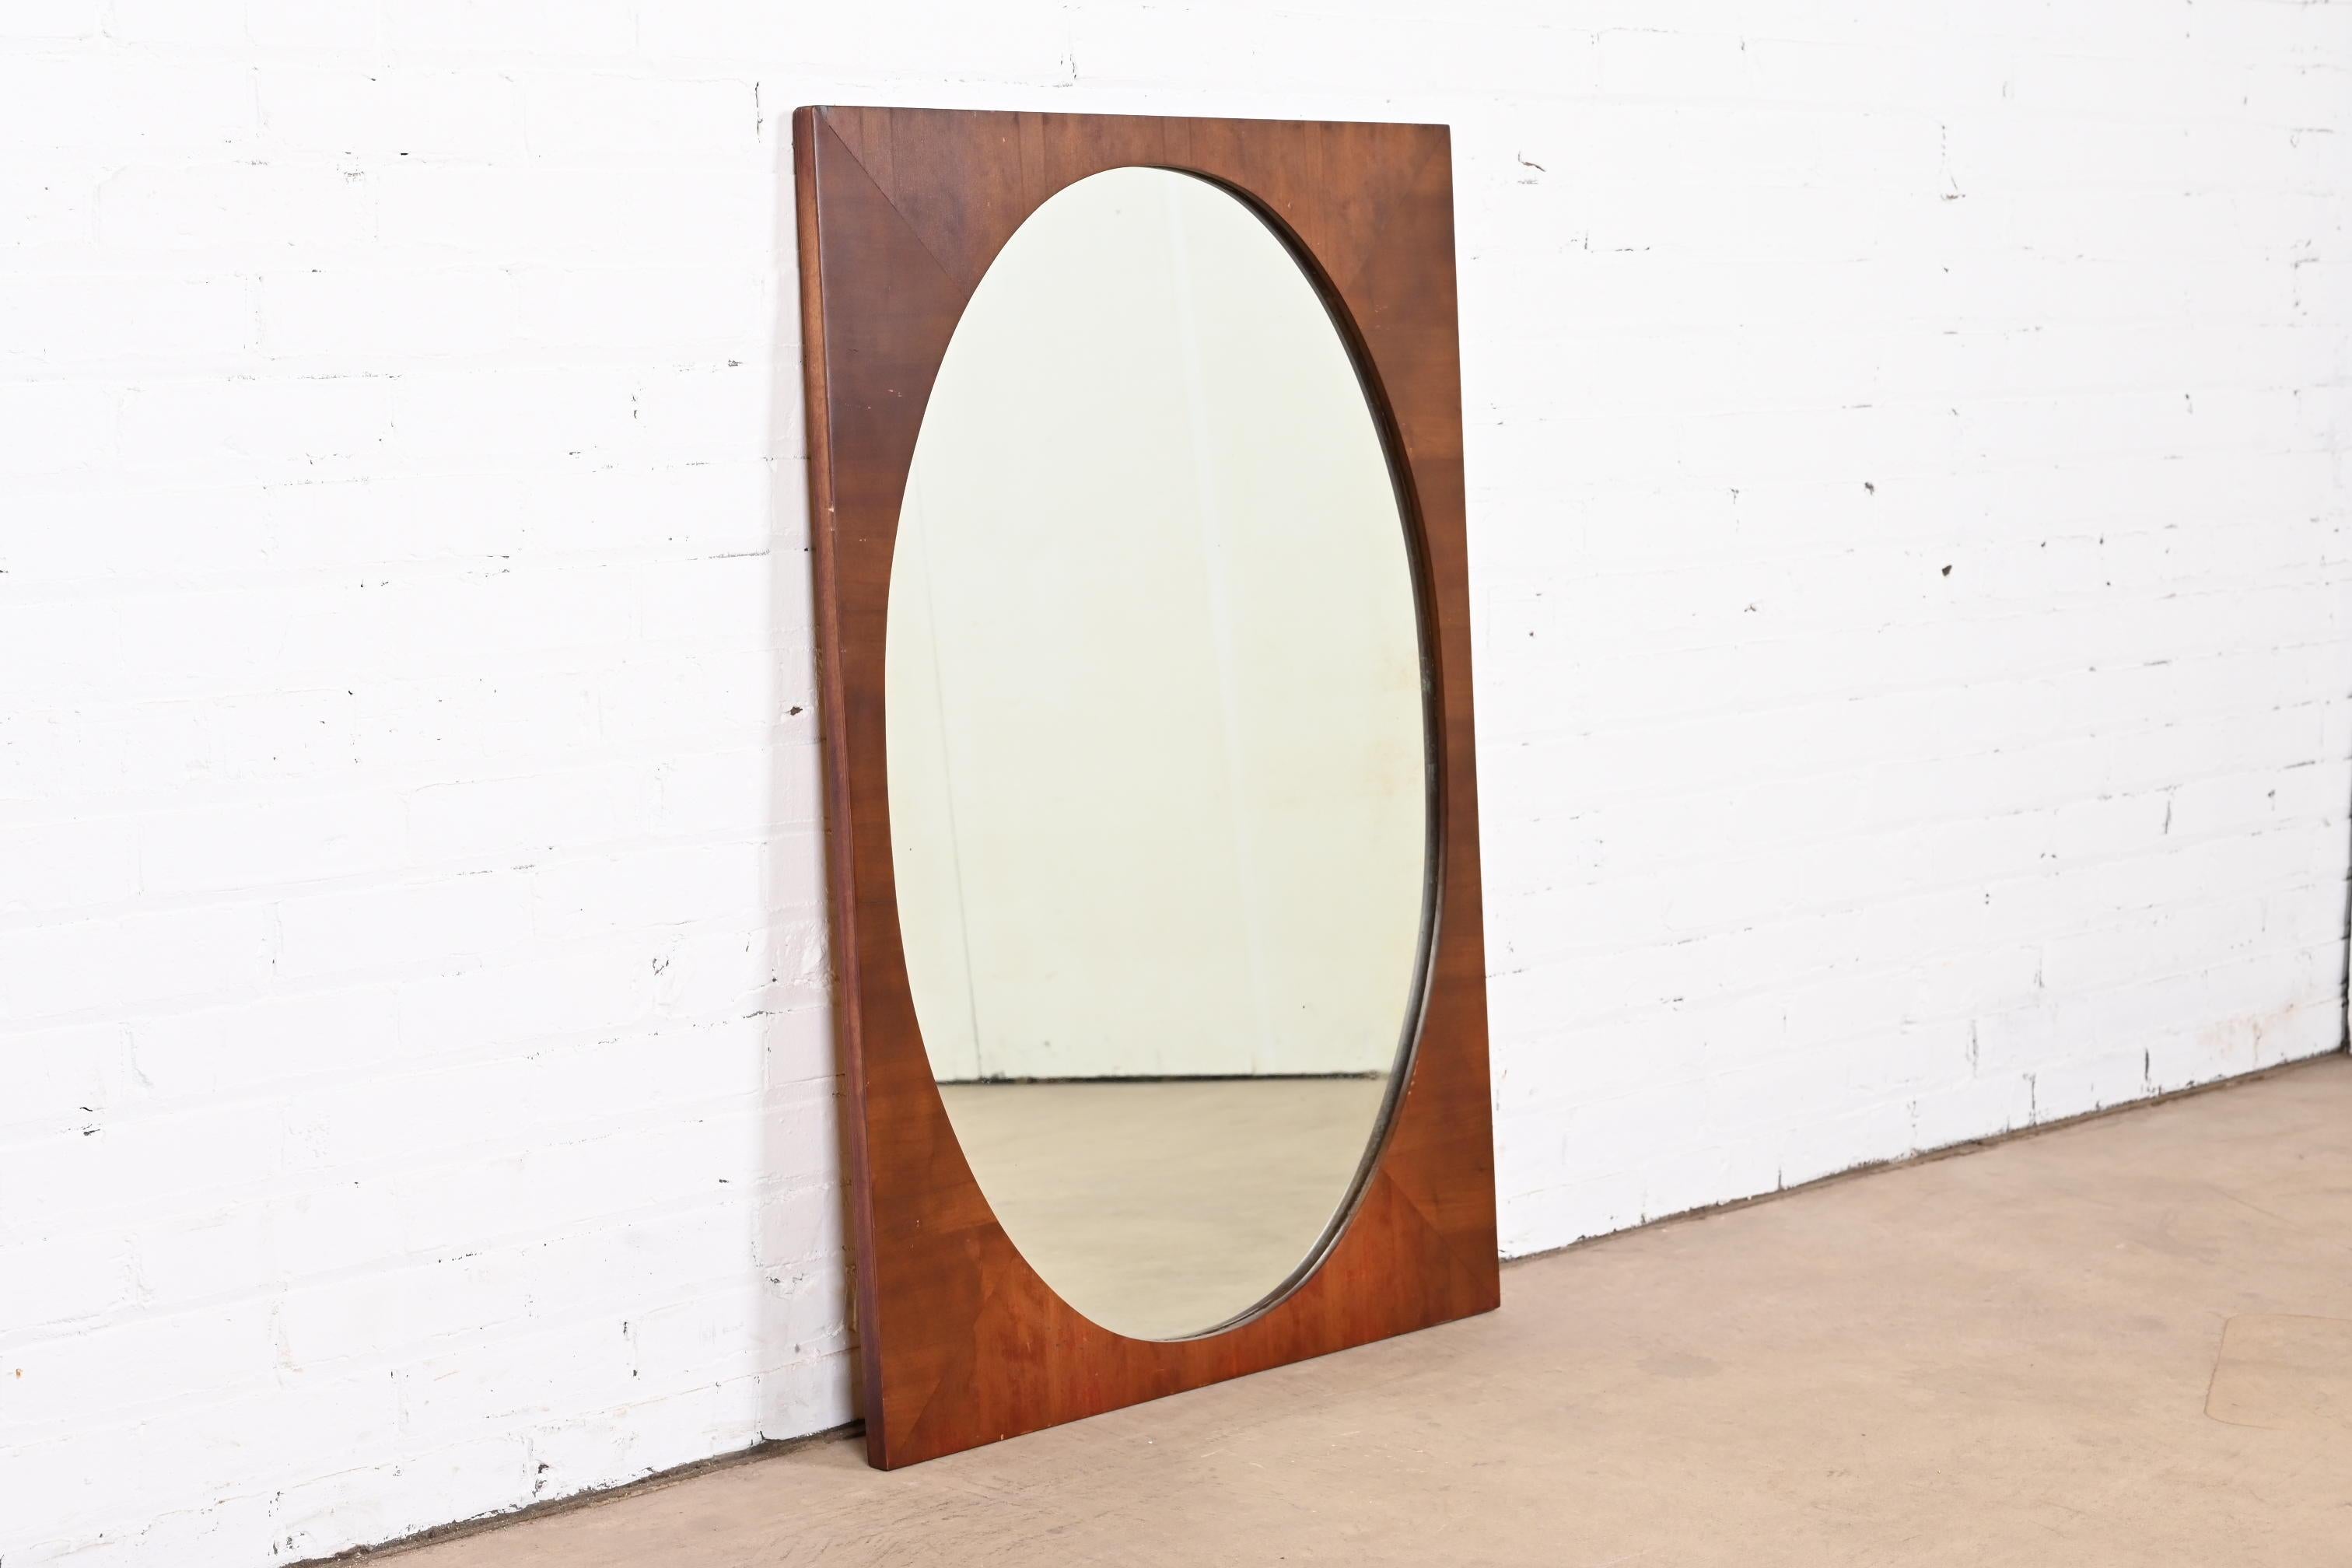 American Mid-Century Modern Oval Wall Mirror in Walnut Frame